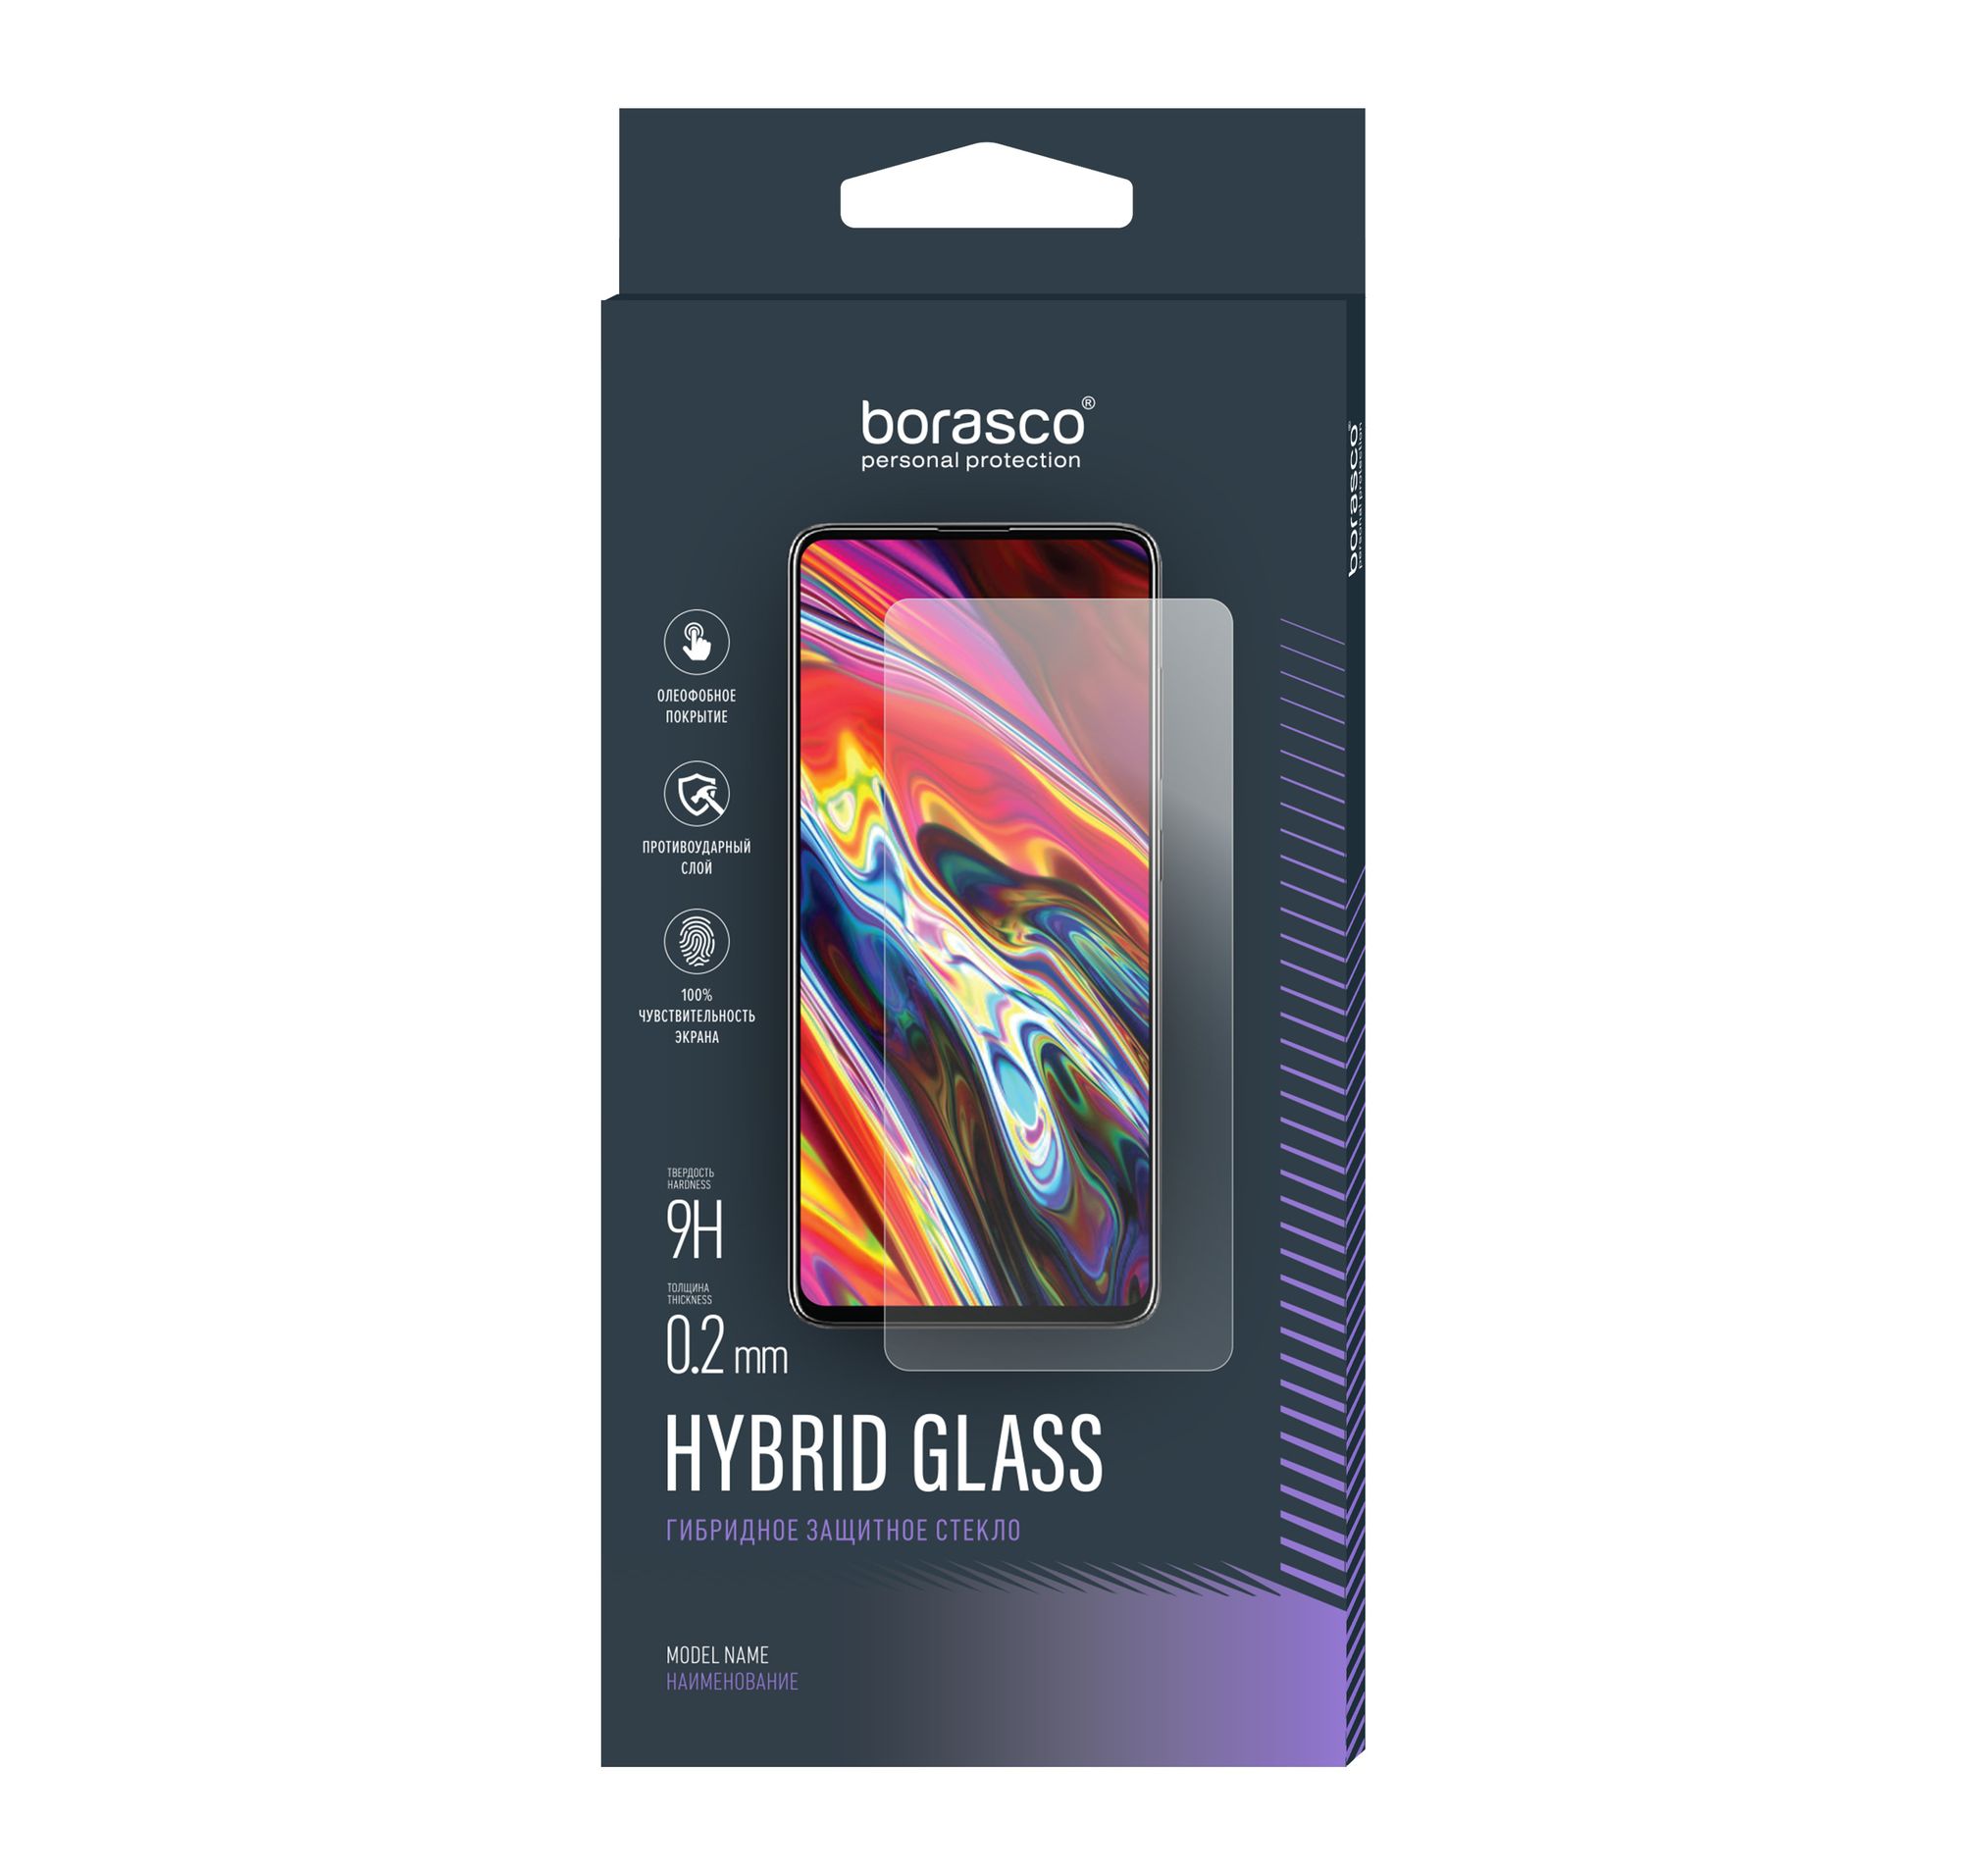 Стекло защитное Hybrid Glass VSP 0,26 мм для OPPO RENO Z силиконовый чехол на oppo reno z цветы 50 для оппо рено зет